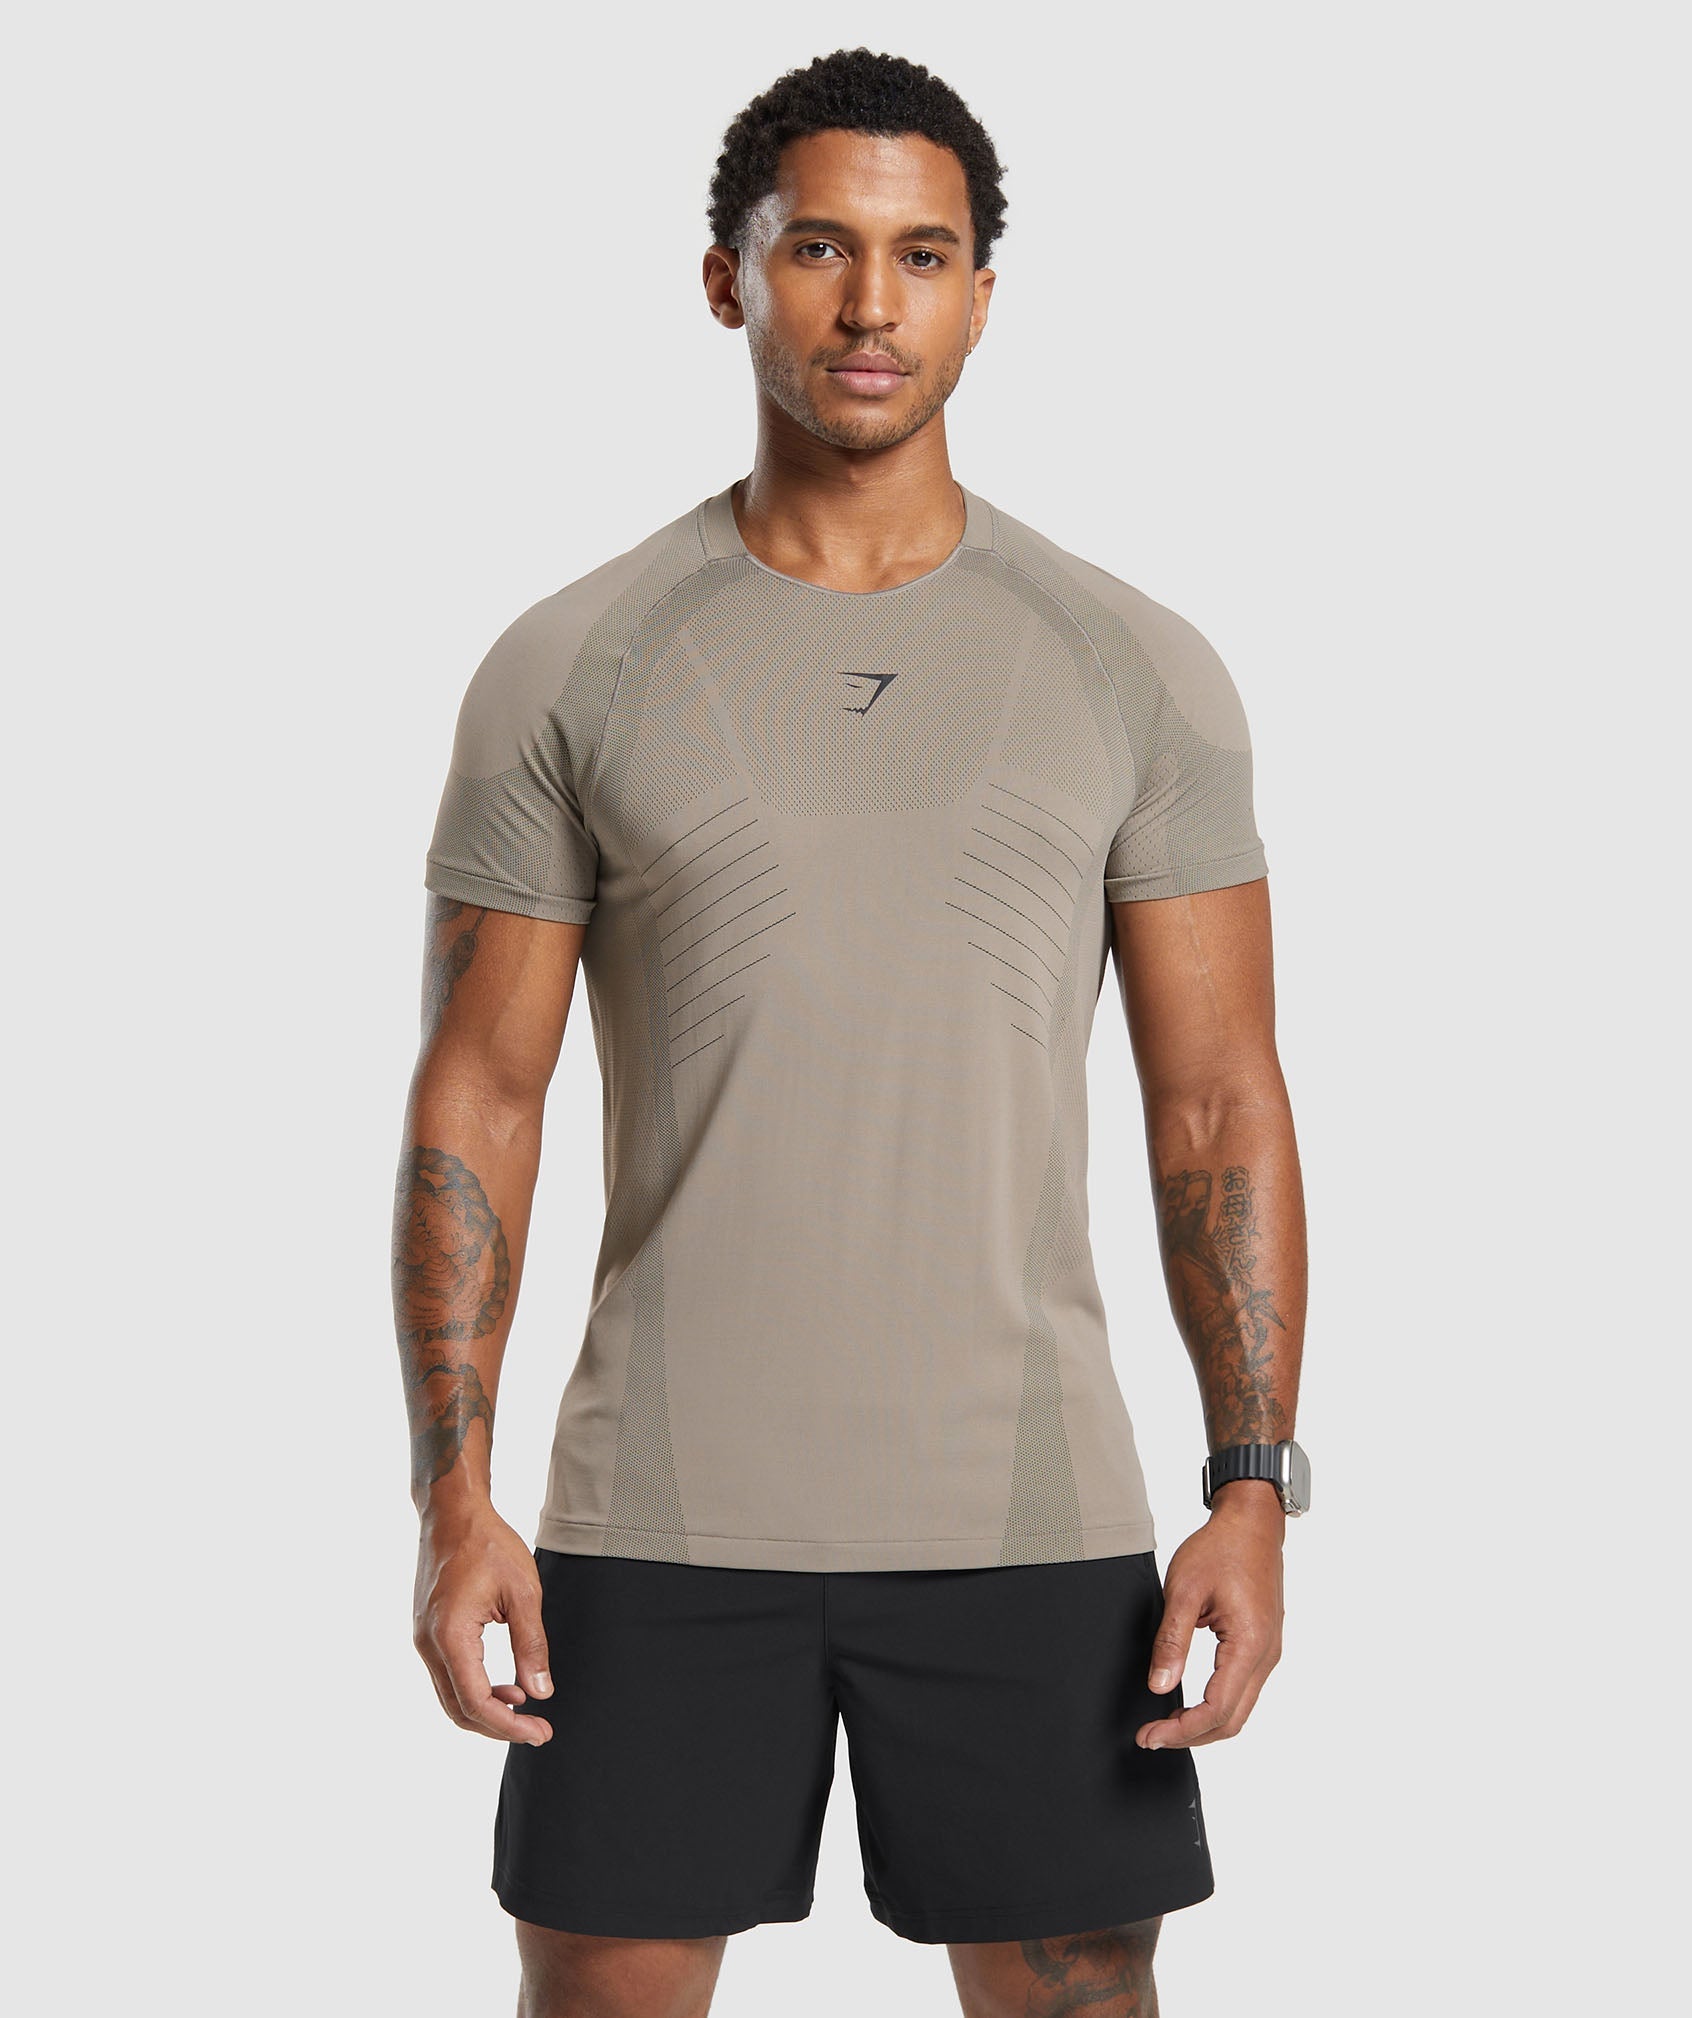 Apex Seamless T-Shirt in Linen Brown/Black - view 1